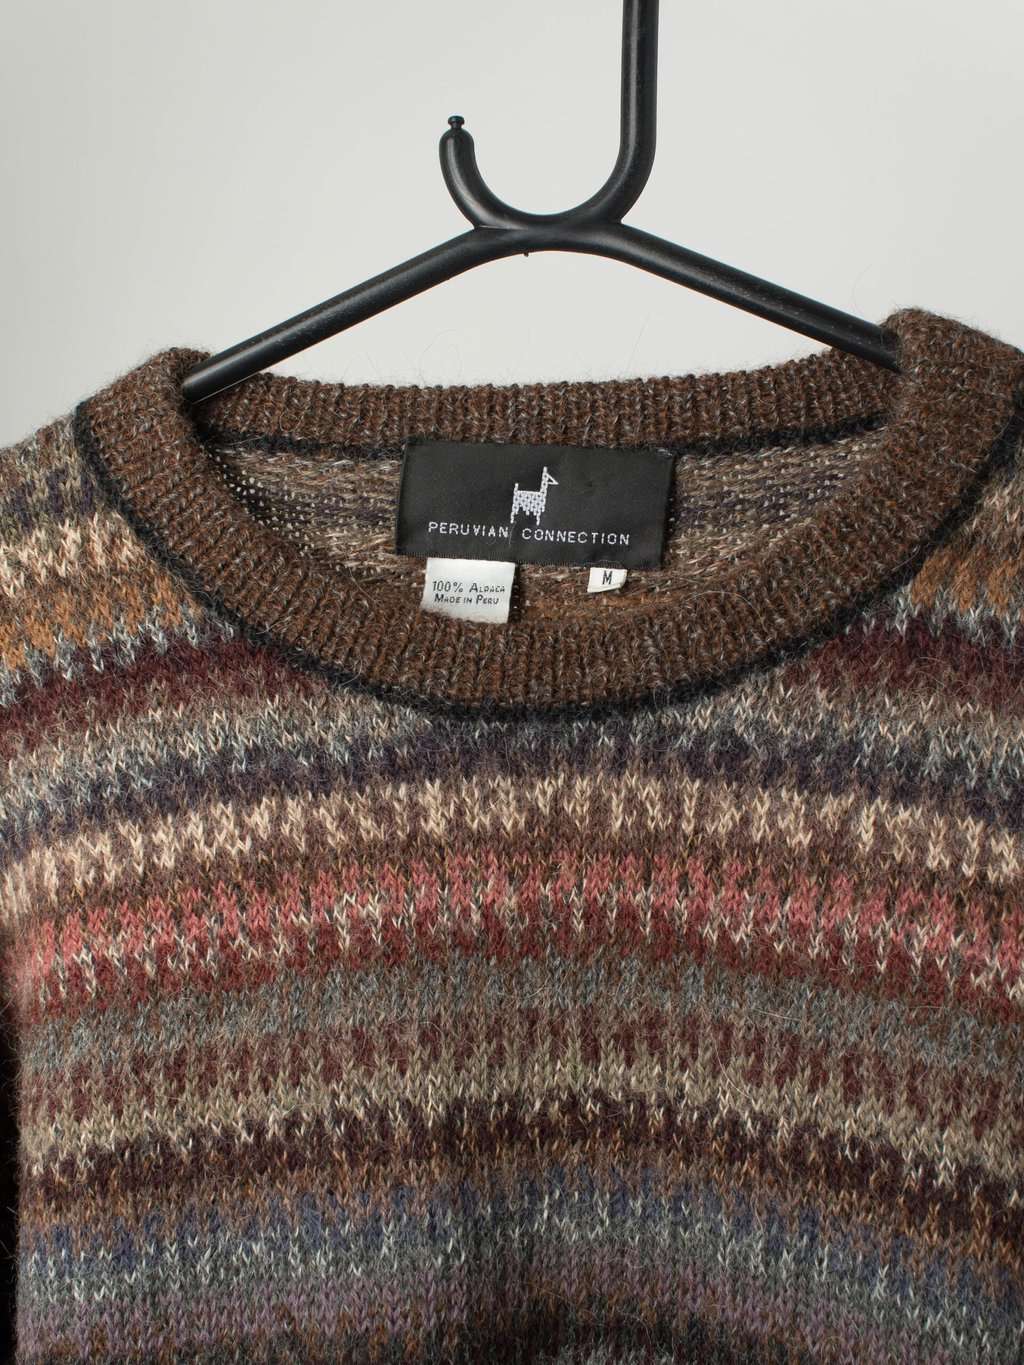 Vintage Peruvian Connection alpaca wool sweater, handknitted in a  multicolored stripe pattern - Medium